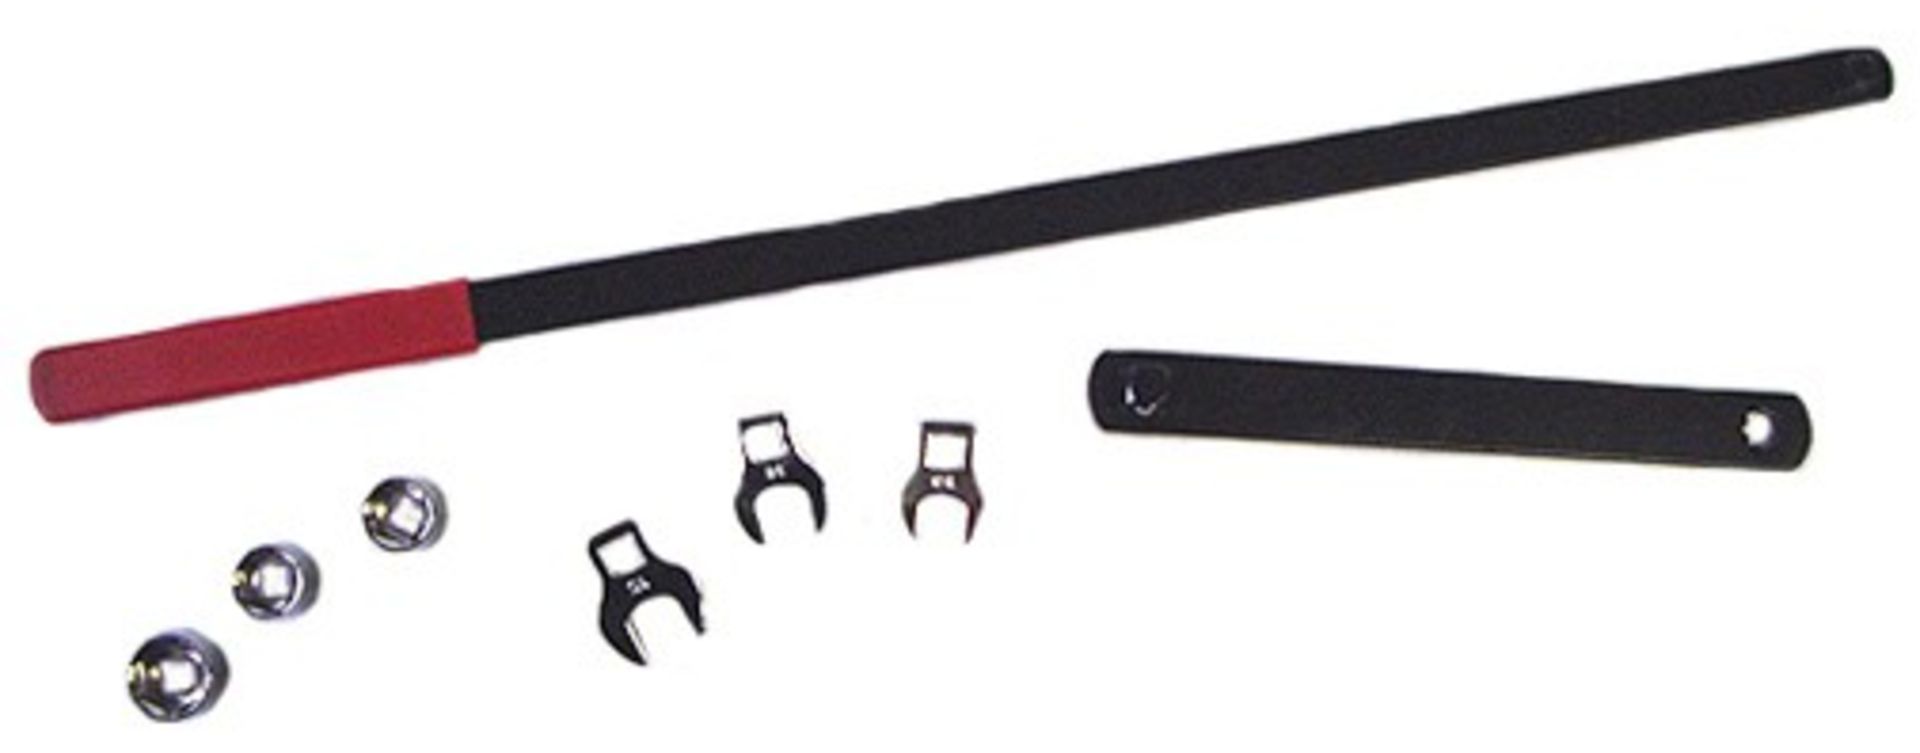 LICOTA Serpentine Belt Tool Kit